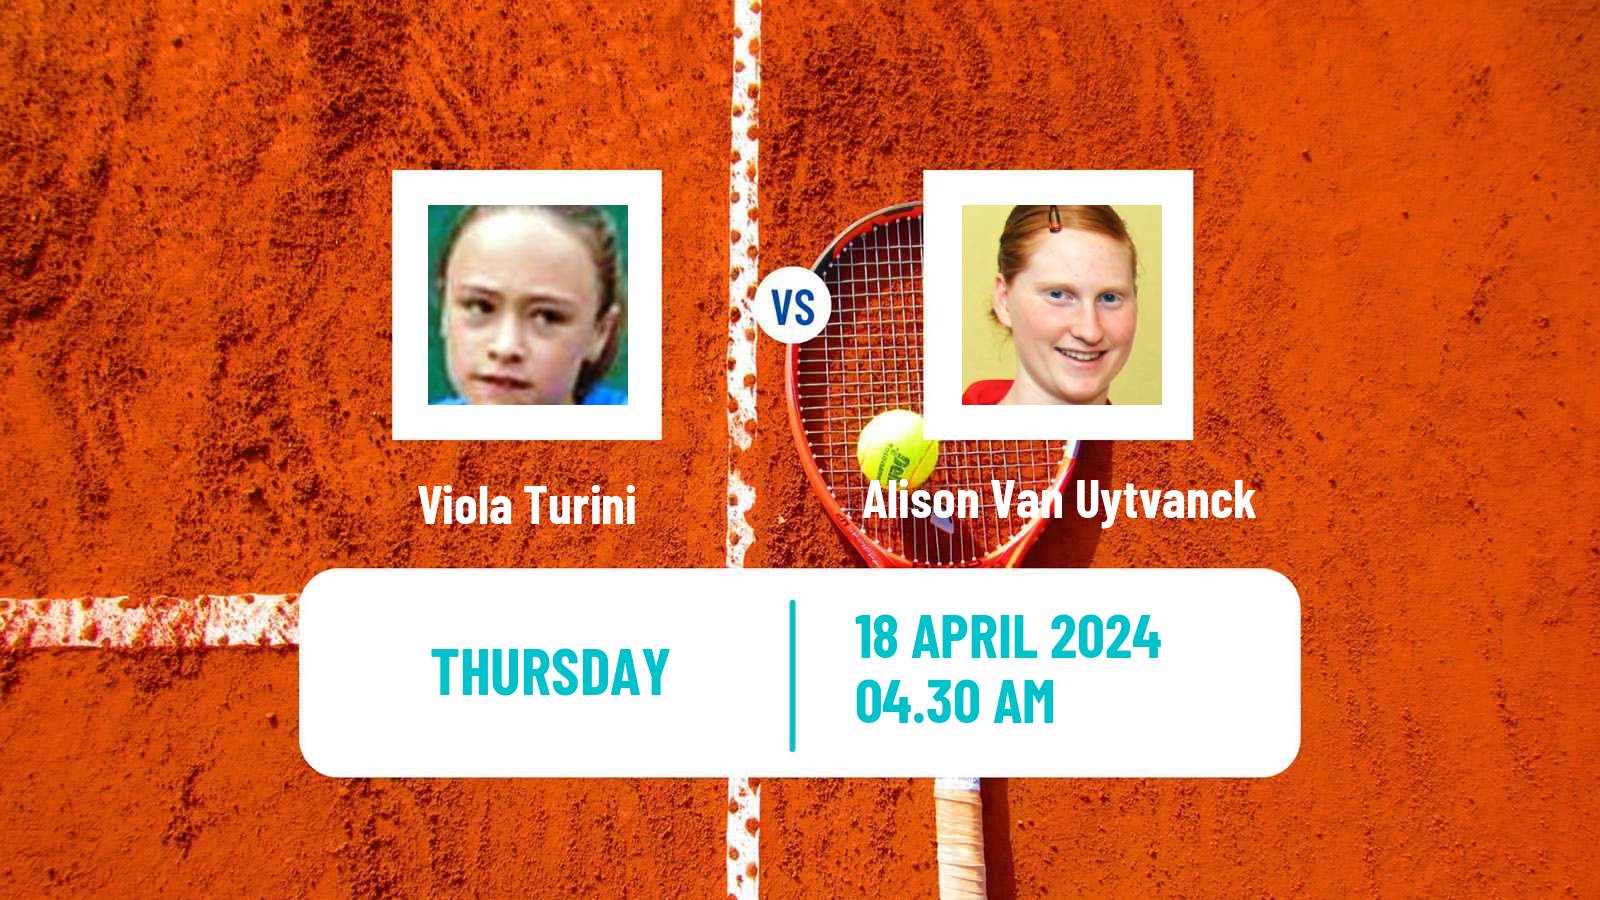 Tennis ITF W35 Hammamet 5 Women Viola Turini - Alison Van Uytvanck